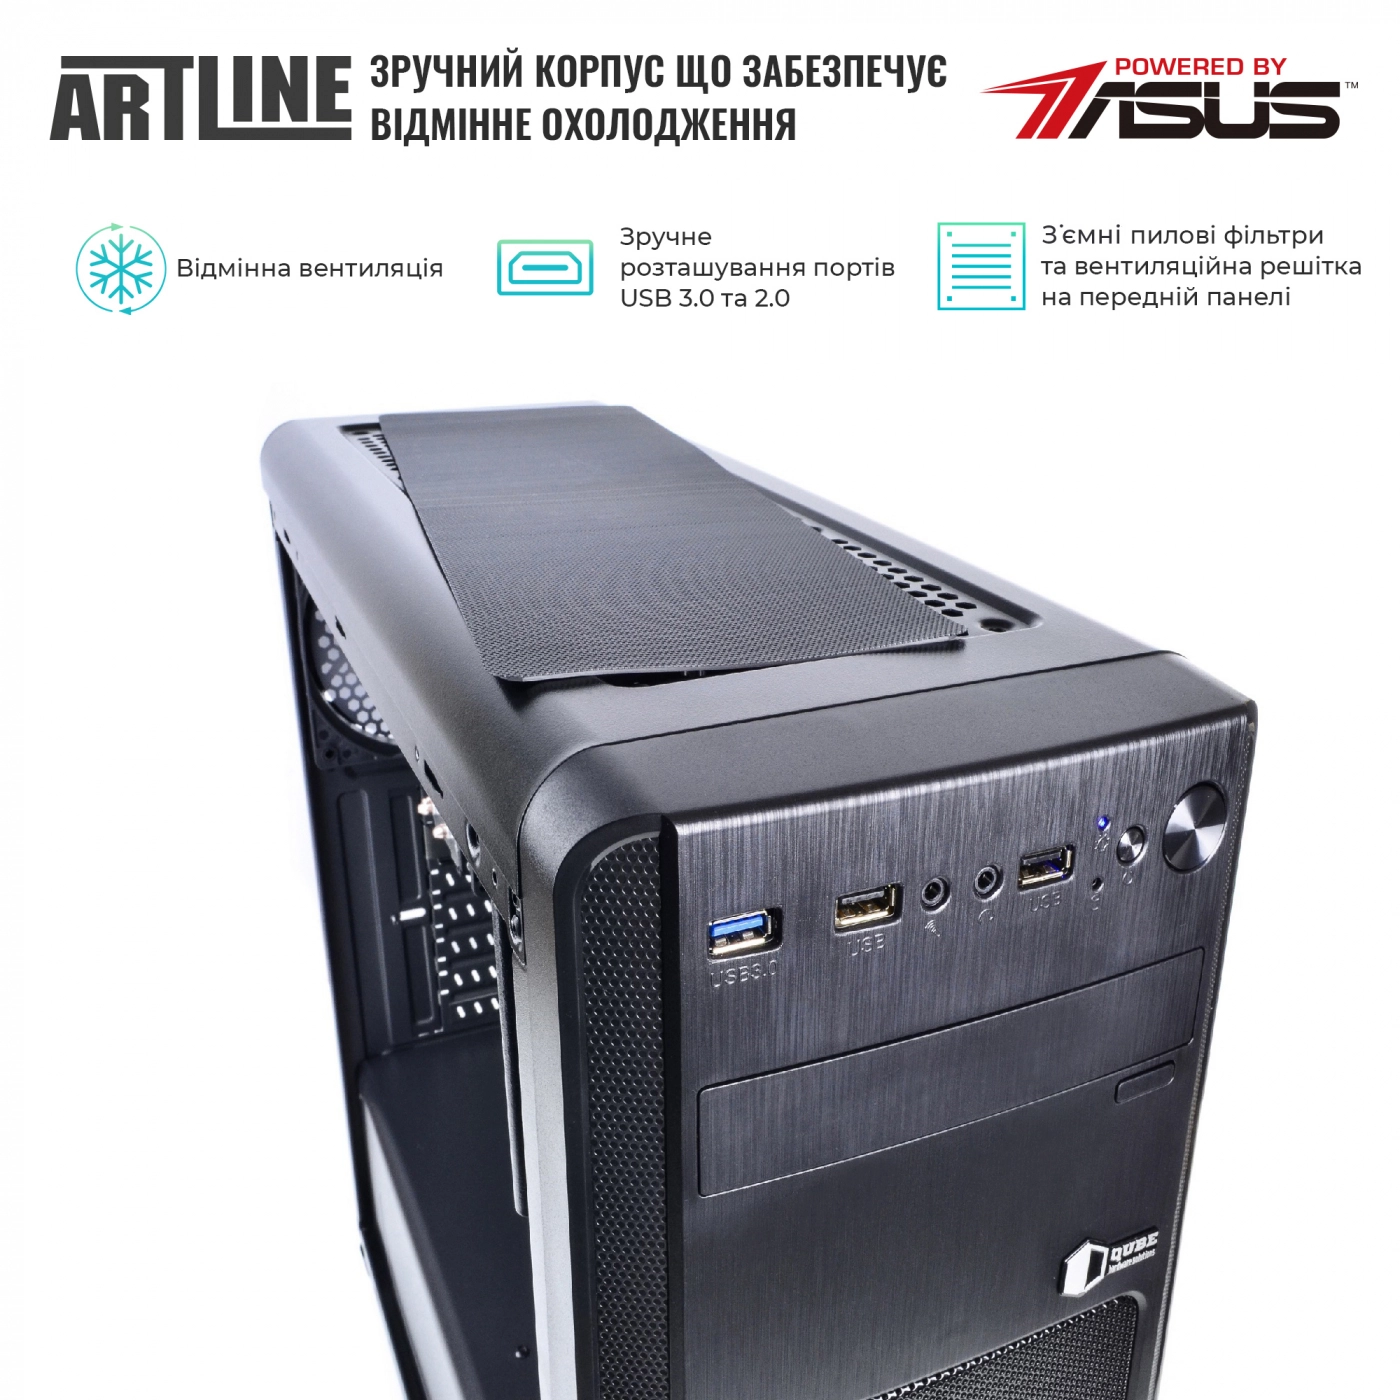 Купити Сервер ARTLINE Business T25v29 - фото 2